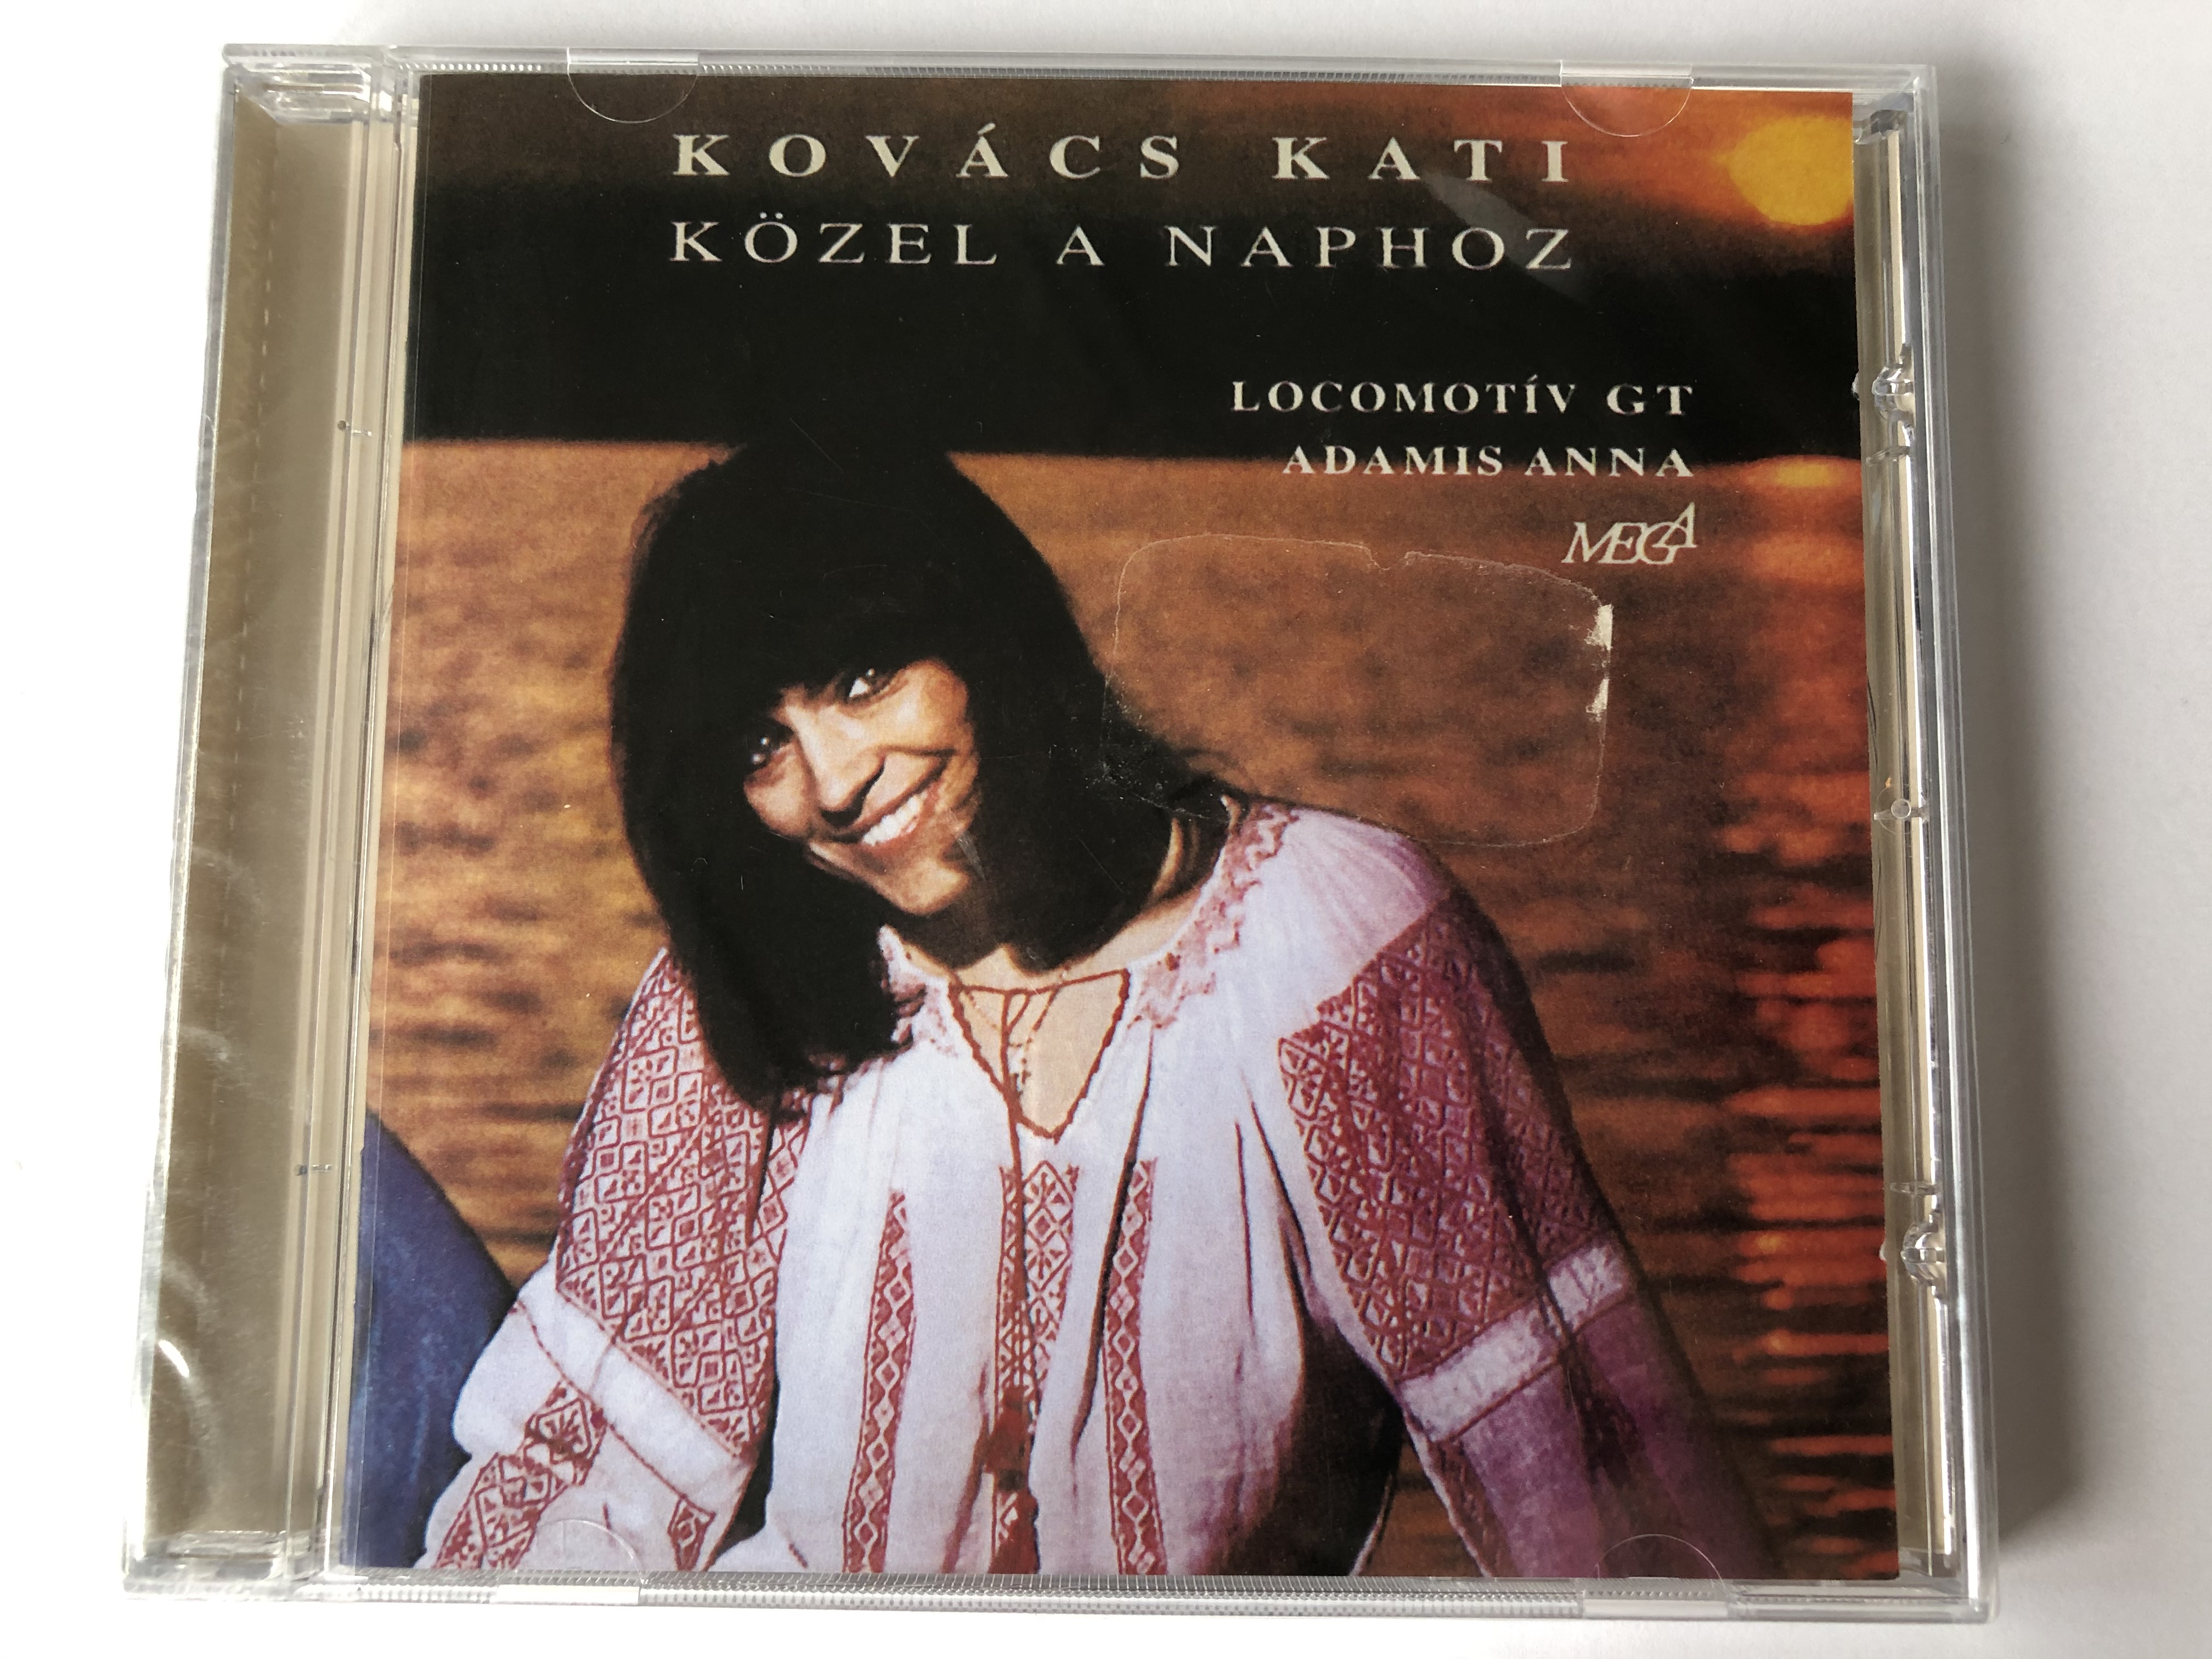 kov-cs-kati-k-zel-a-naphoz-locomotiv-gt-adamis-anna-mega-audio-cd-1995-hcd-17496-1-.jpg